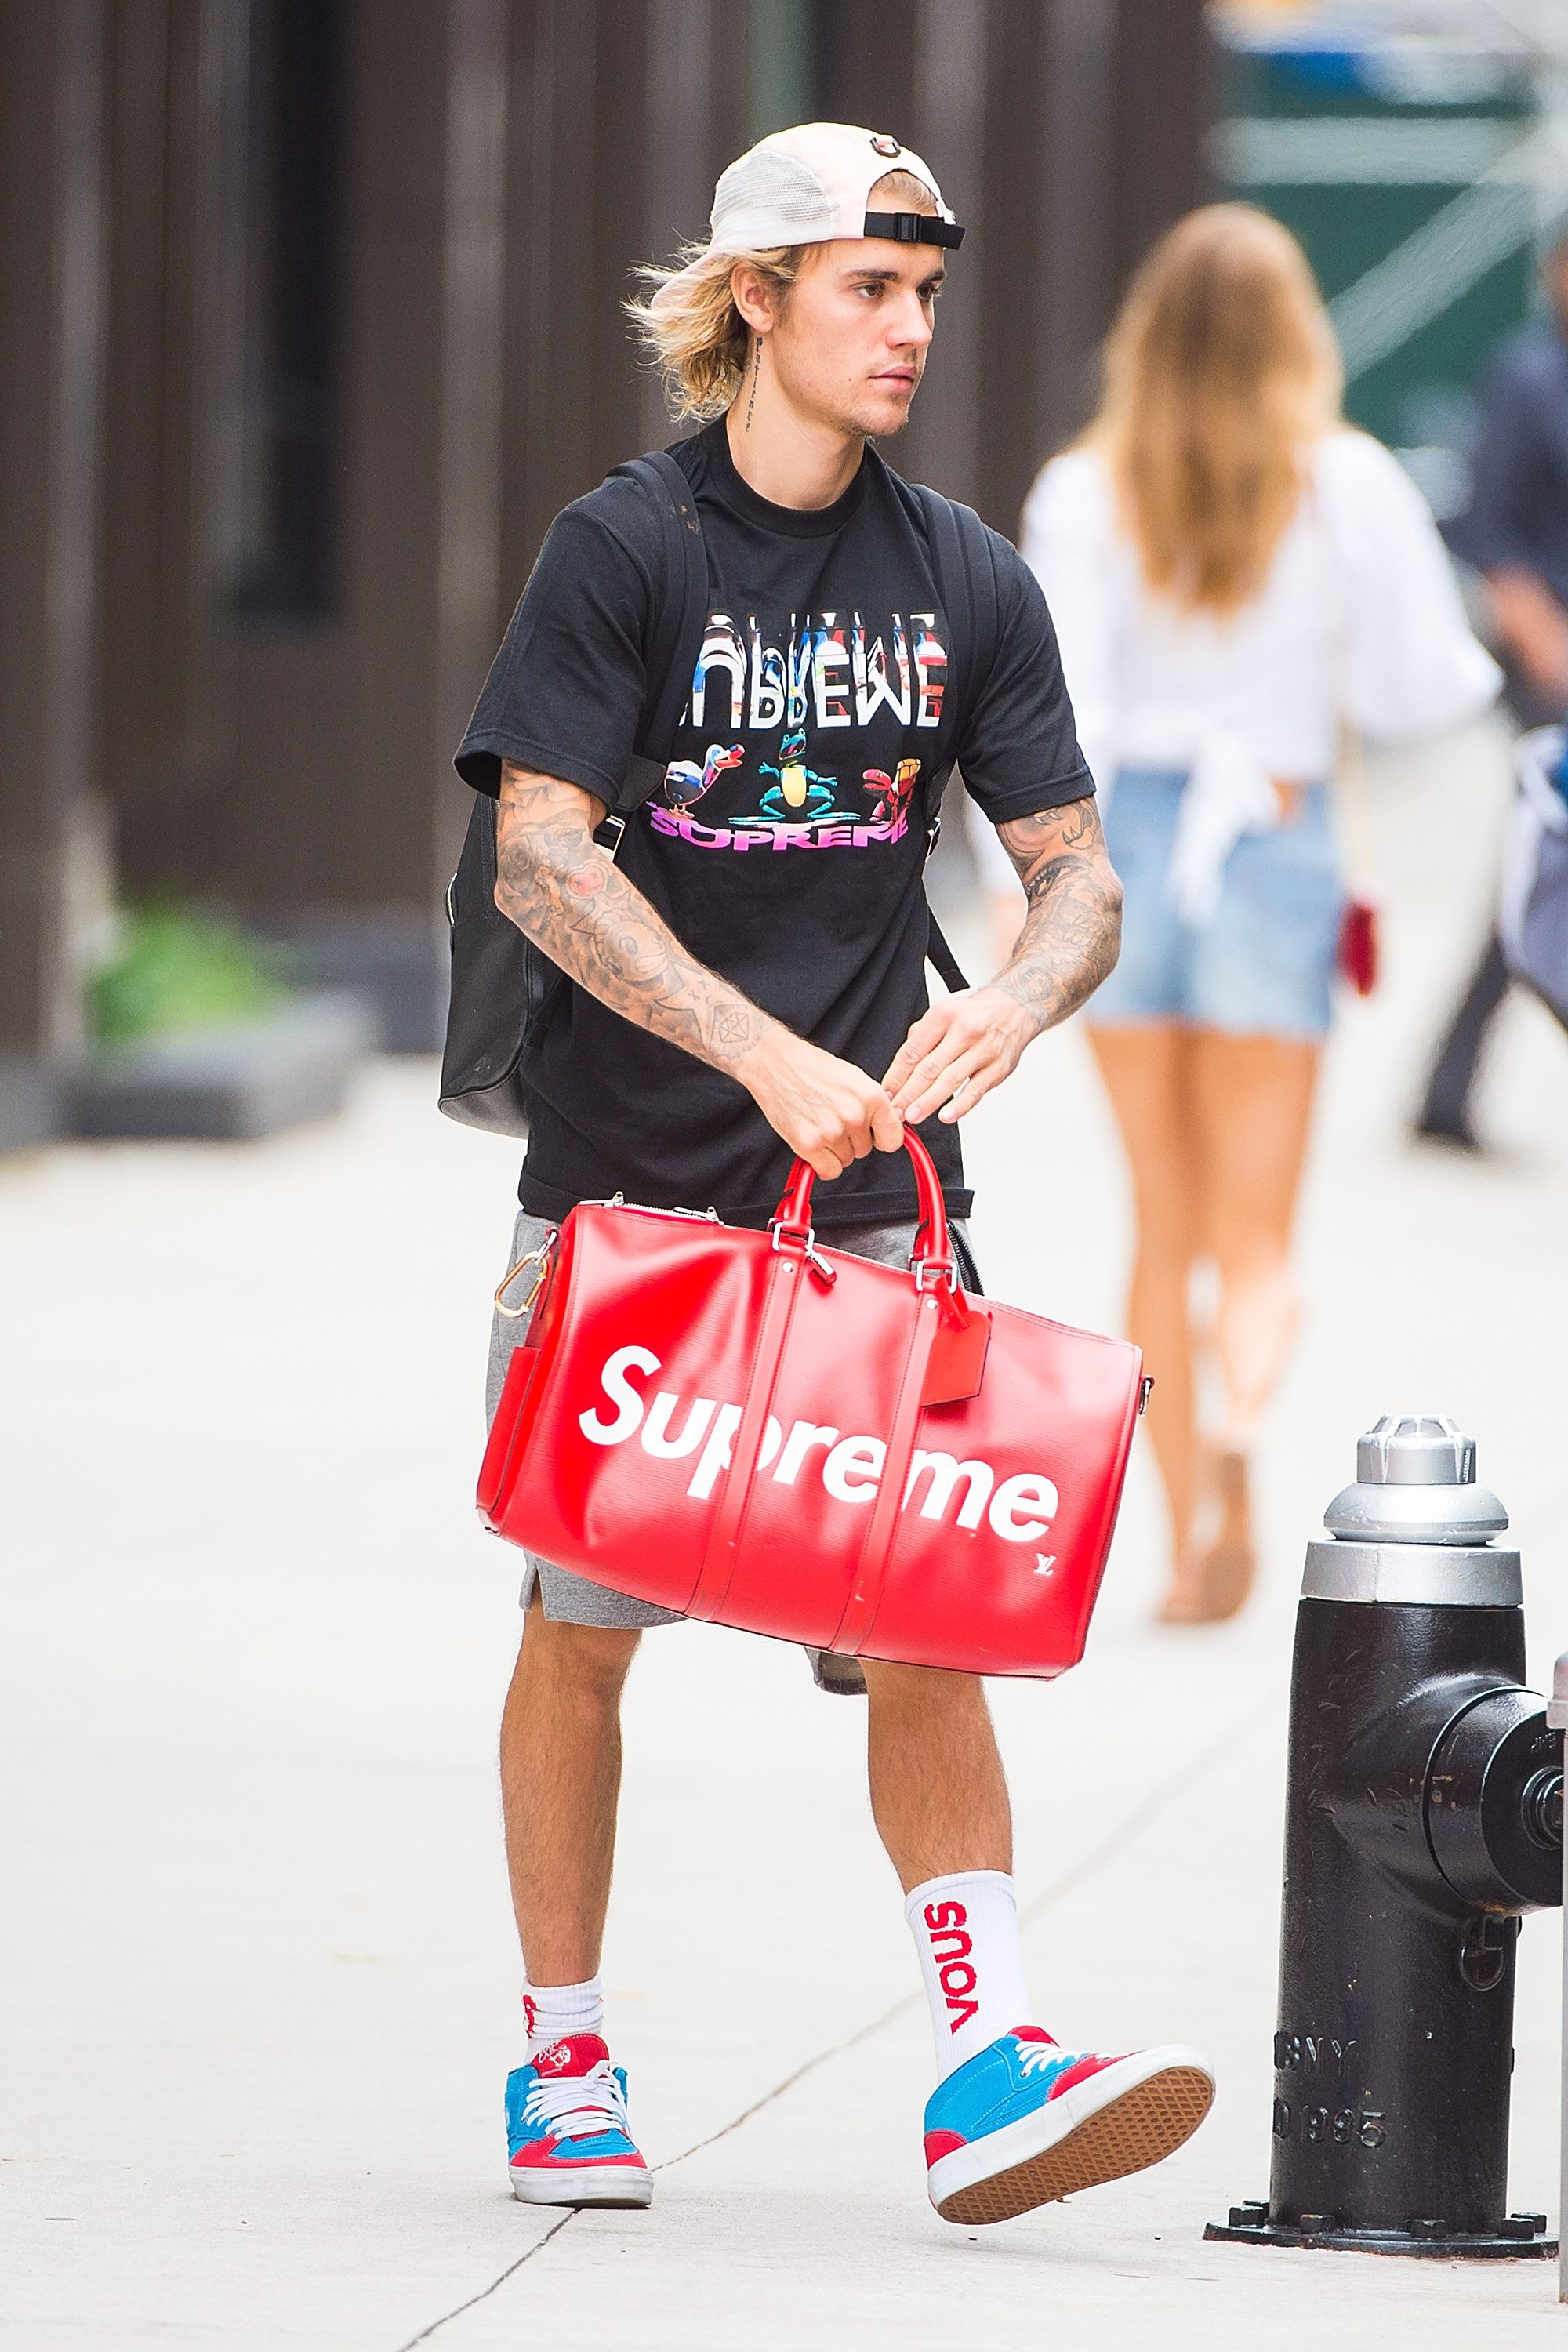 Bieber Clothing on X: justinbieber via Instagram (July 6) wearing